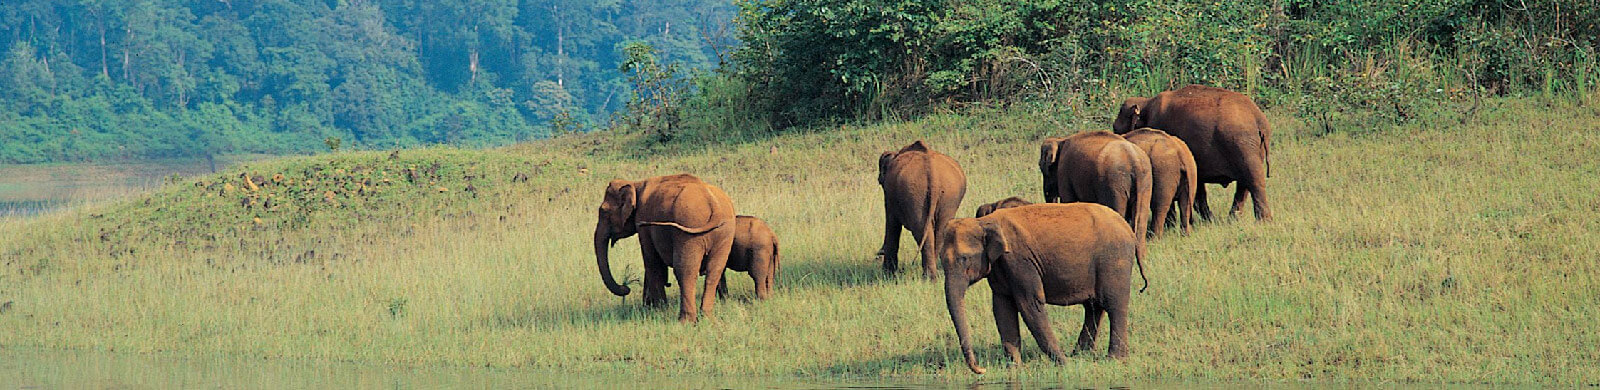 Periyar Wildlife Sanctuary- Periyar National Park in Kerala, India